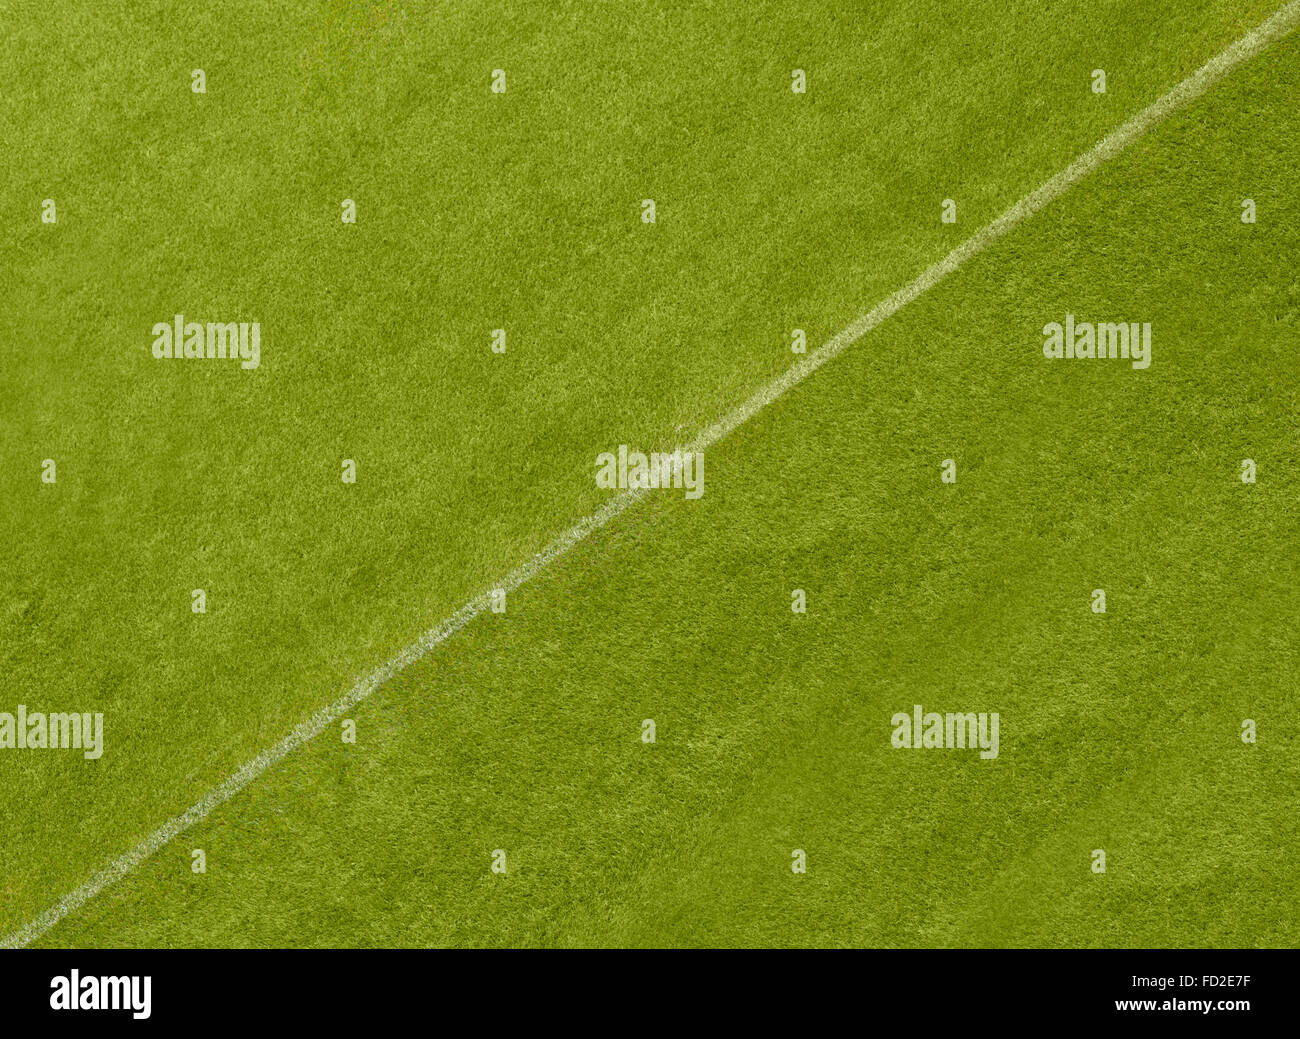 A white line diagonally dividing a grass playing surface Stock Photo